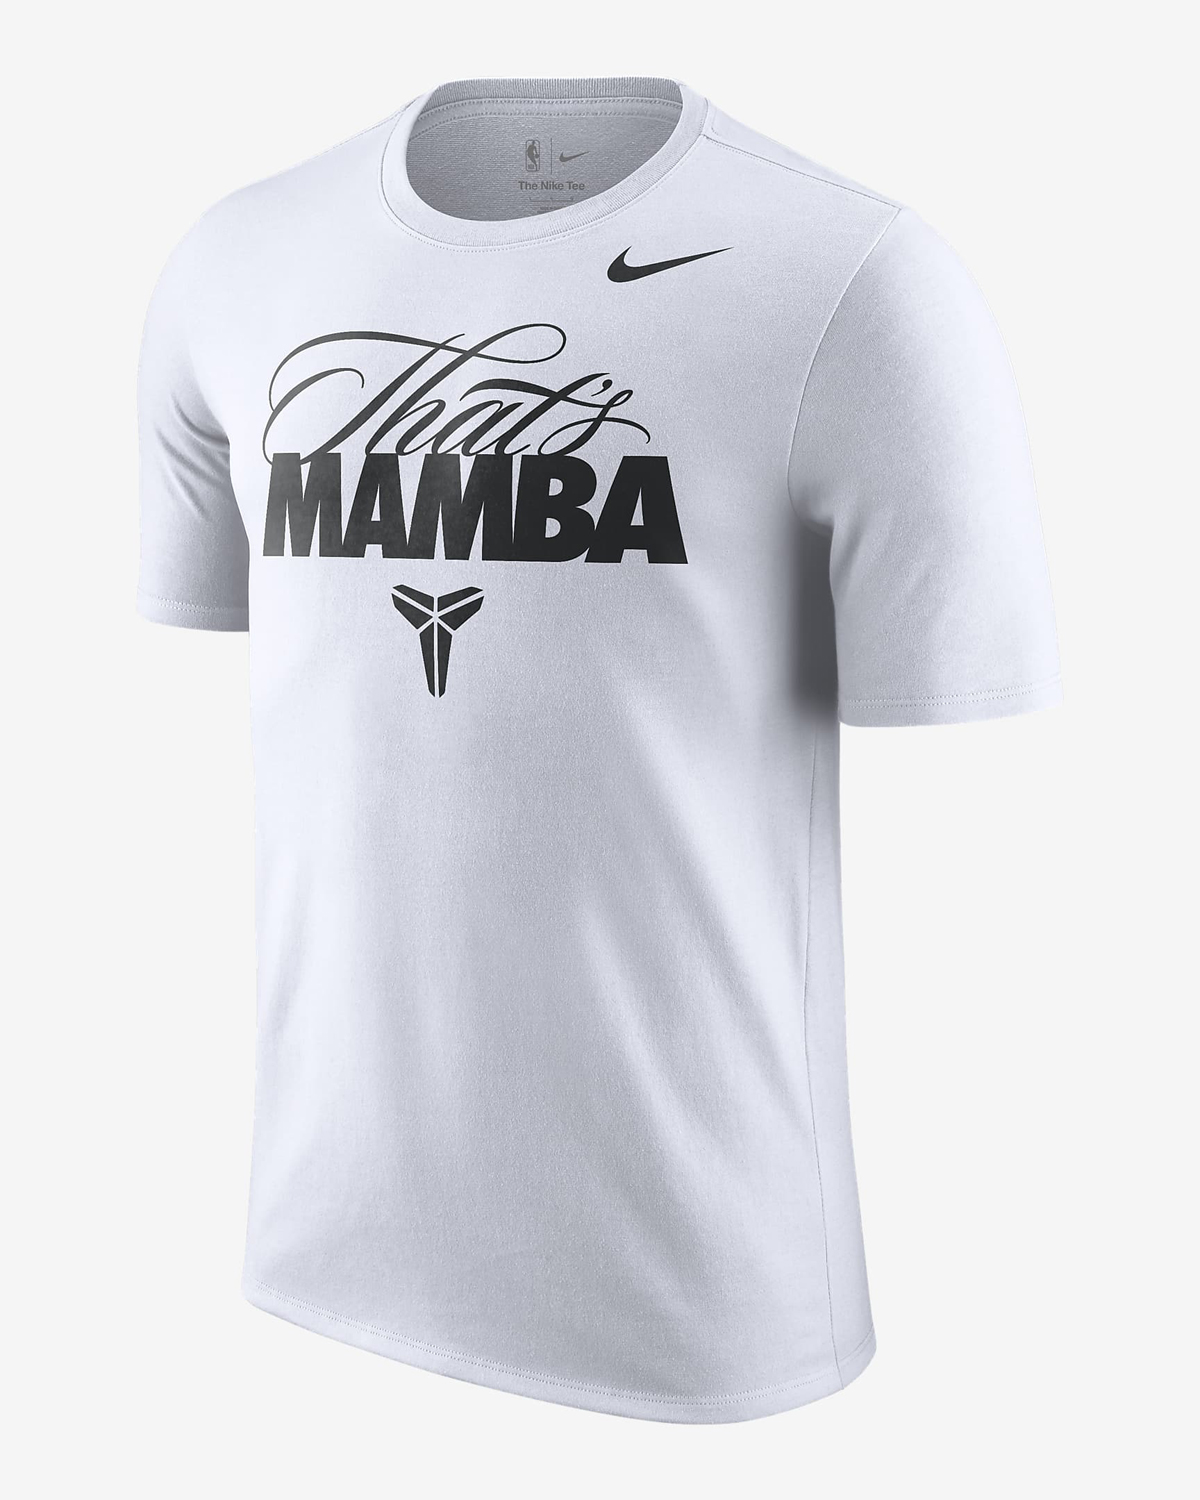 Nike Kobe Thats Mamba T Shirt White